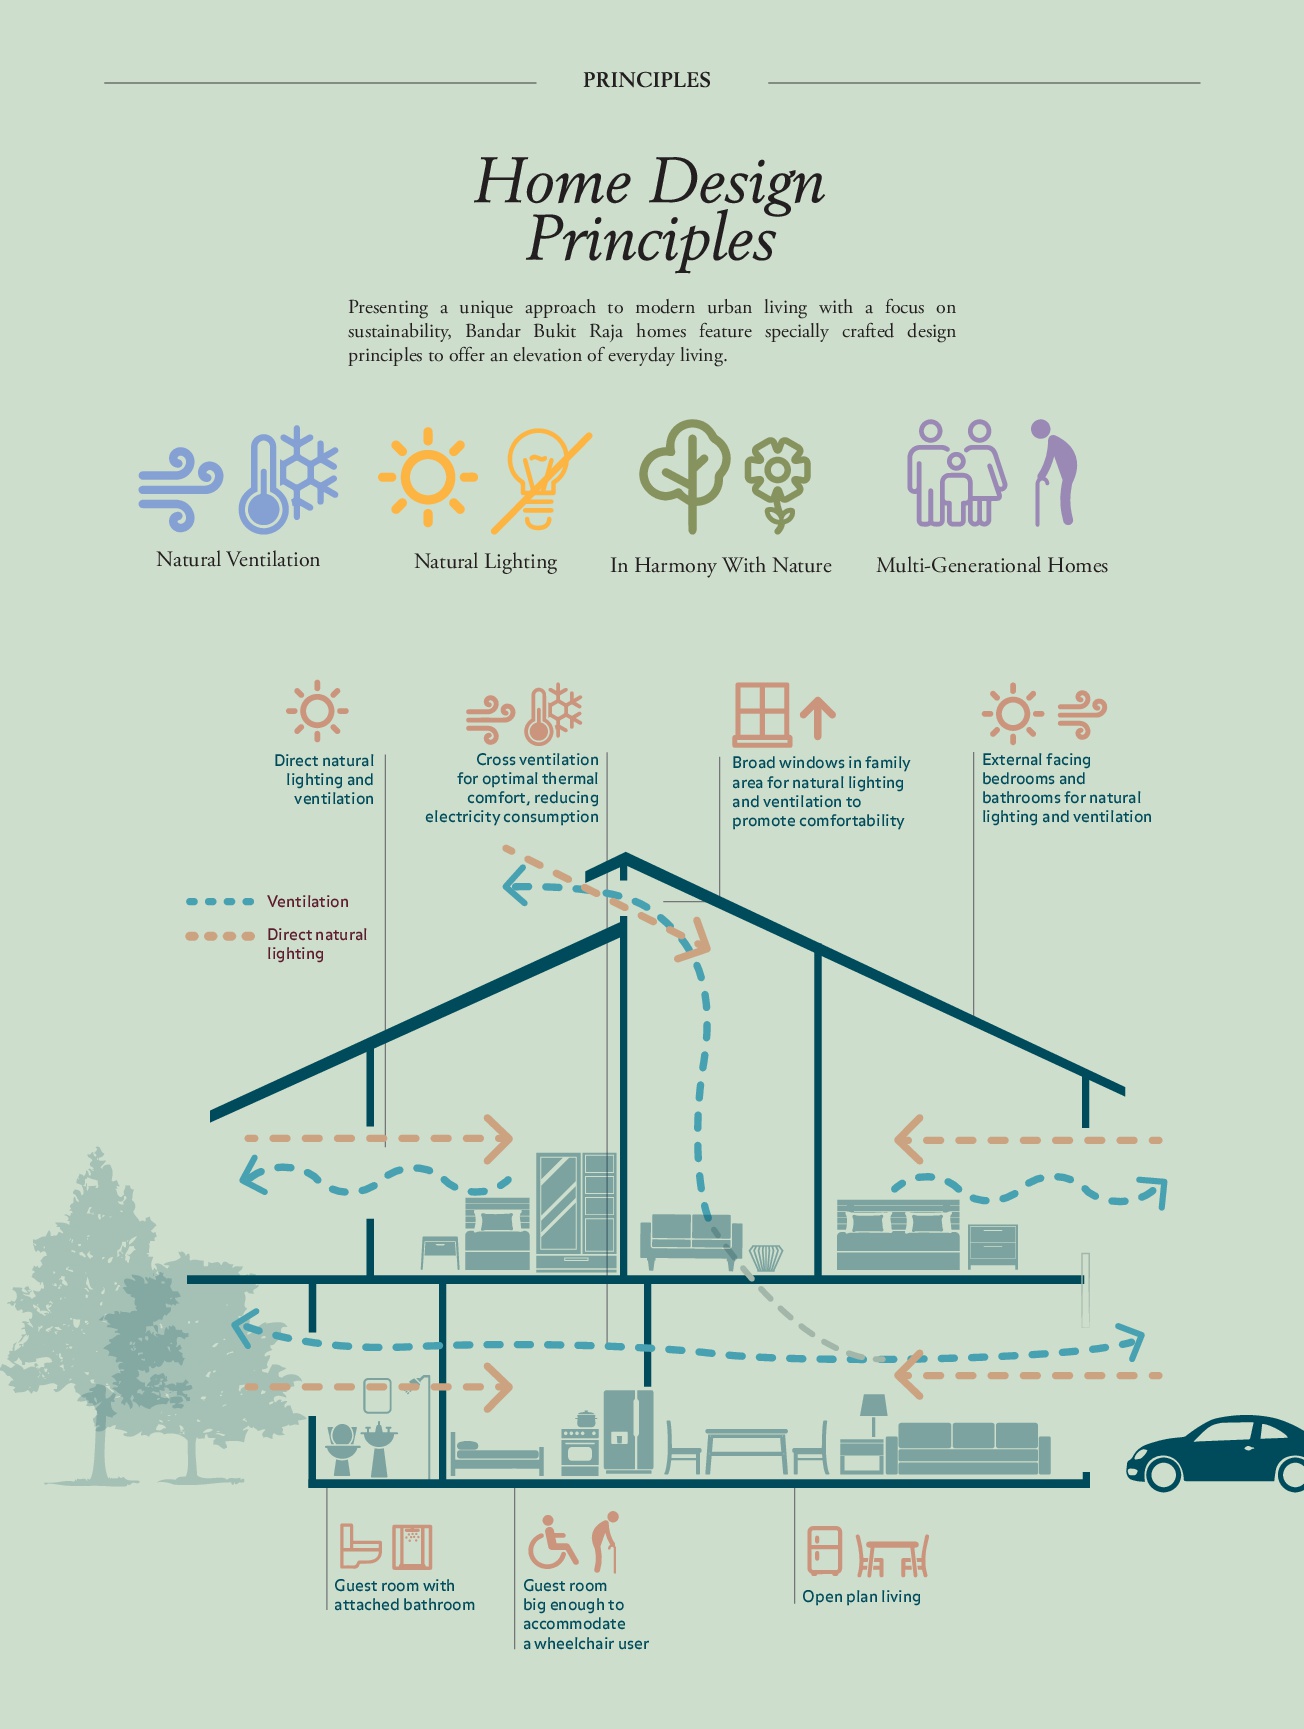 Bandar Bukit Raja - Azira's Home Design Principle